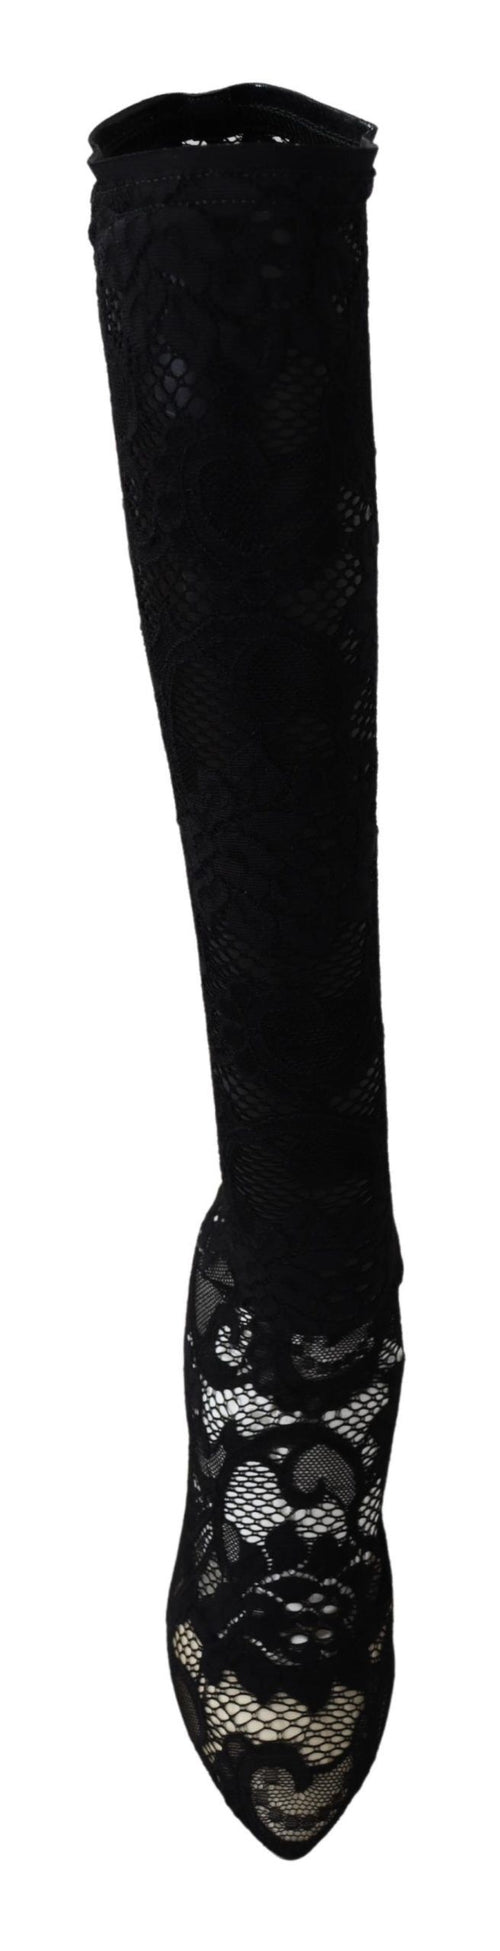 Dolce & Gabbana Elegant Black Stretch Sock Women's Pumps